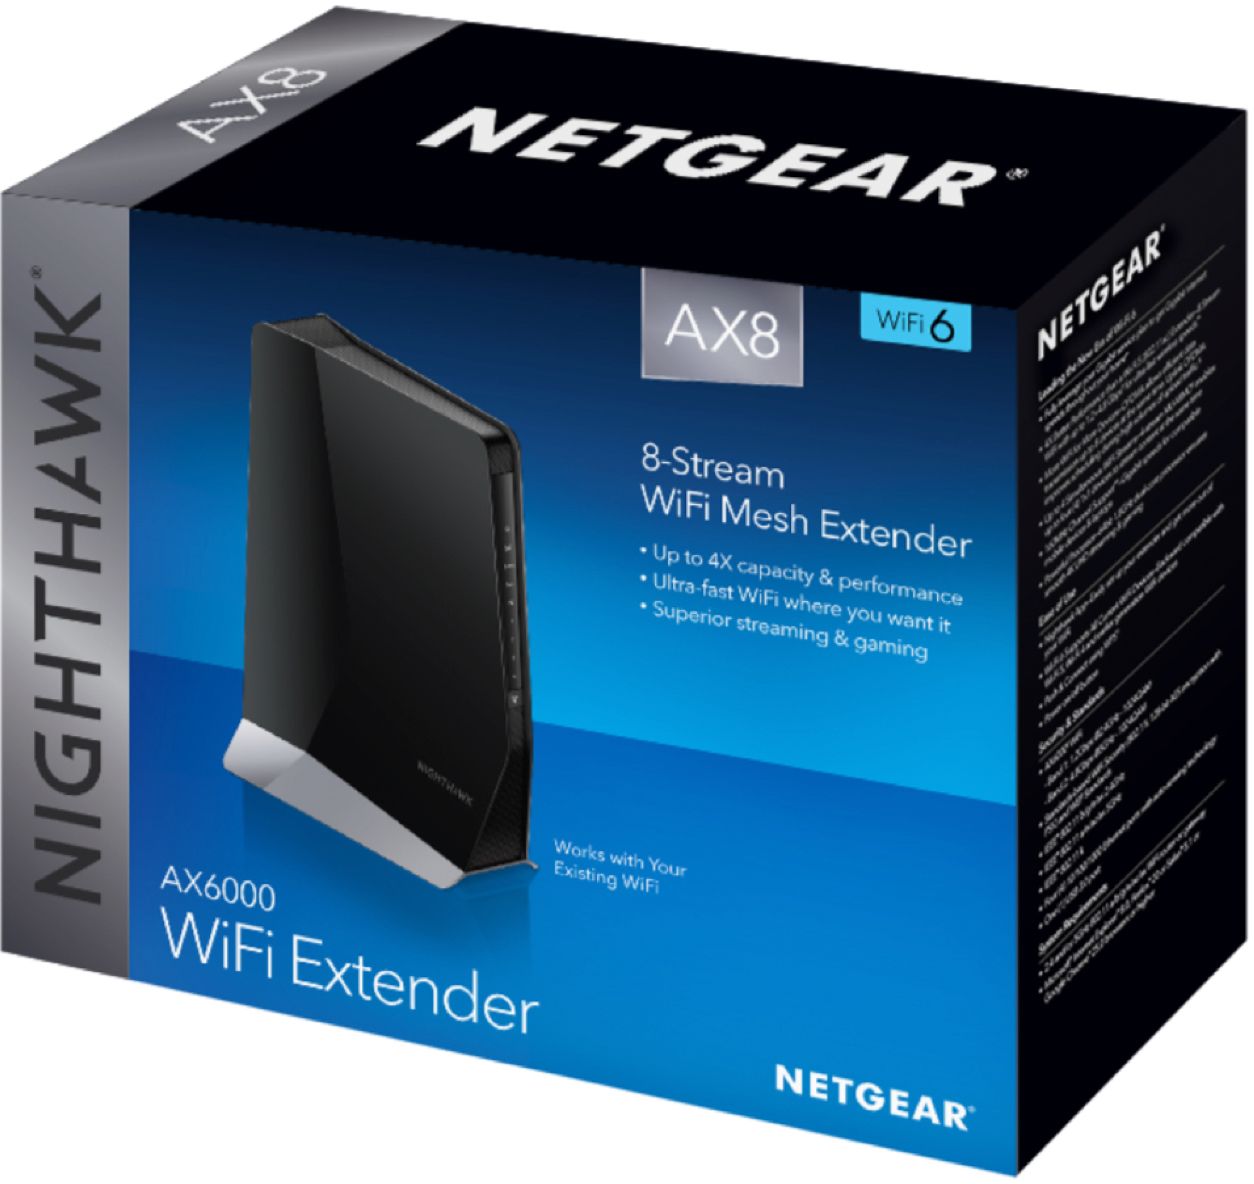 NETGEAR Nighthawk EAX80 AX6000 WiFi 6 Range Extender and Signal 